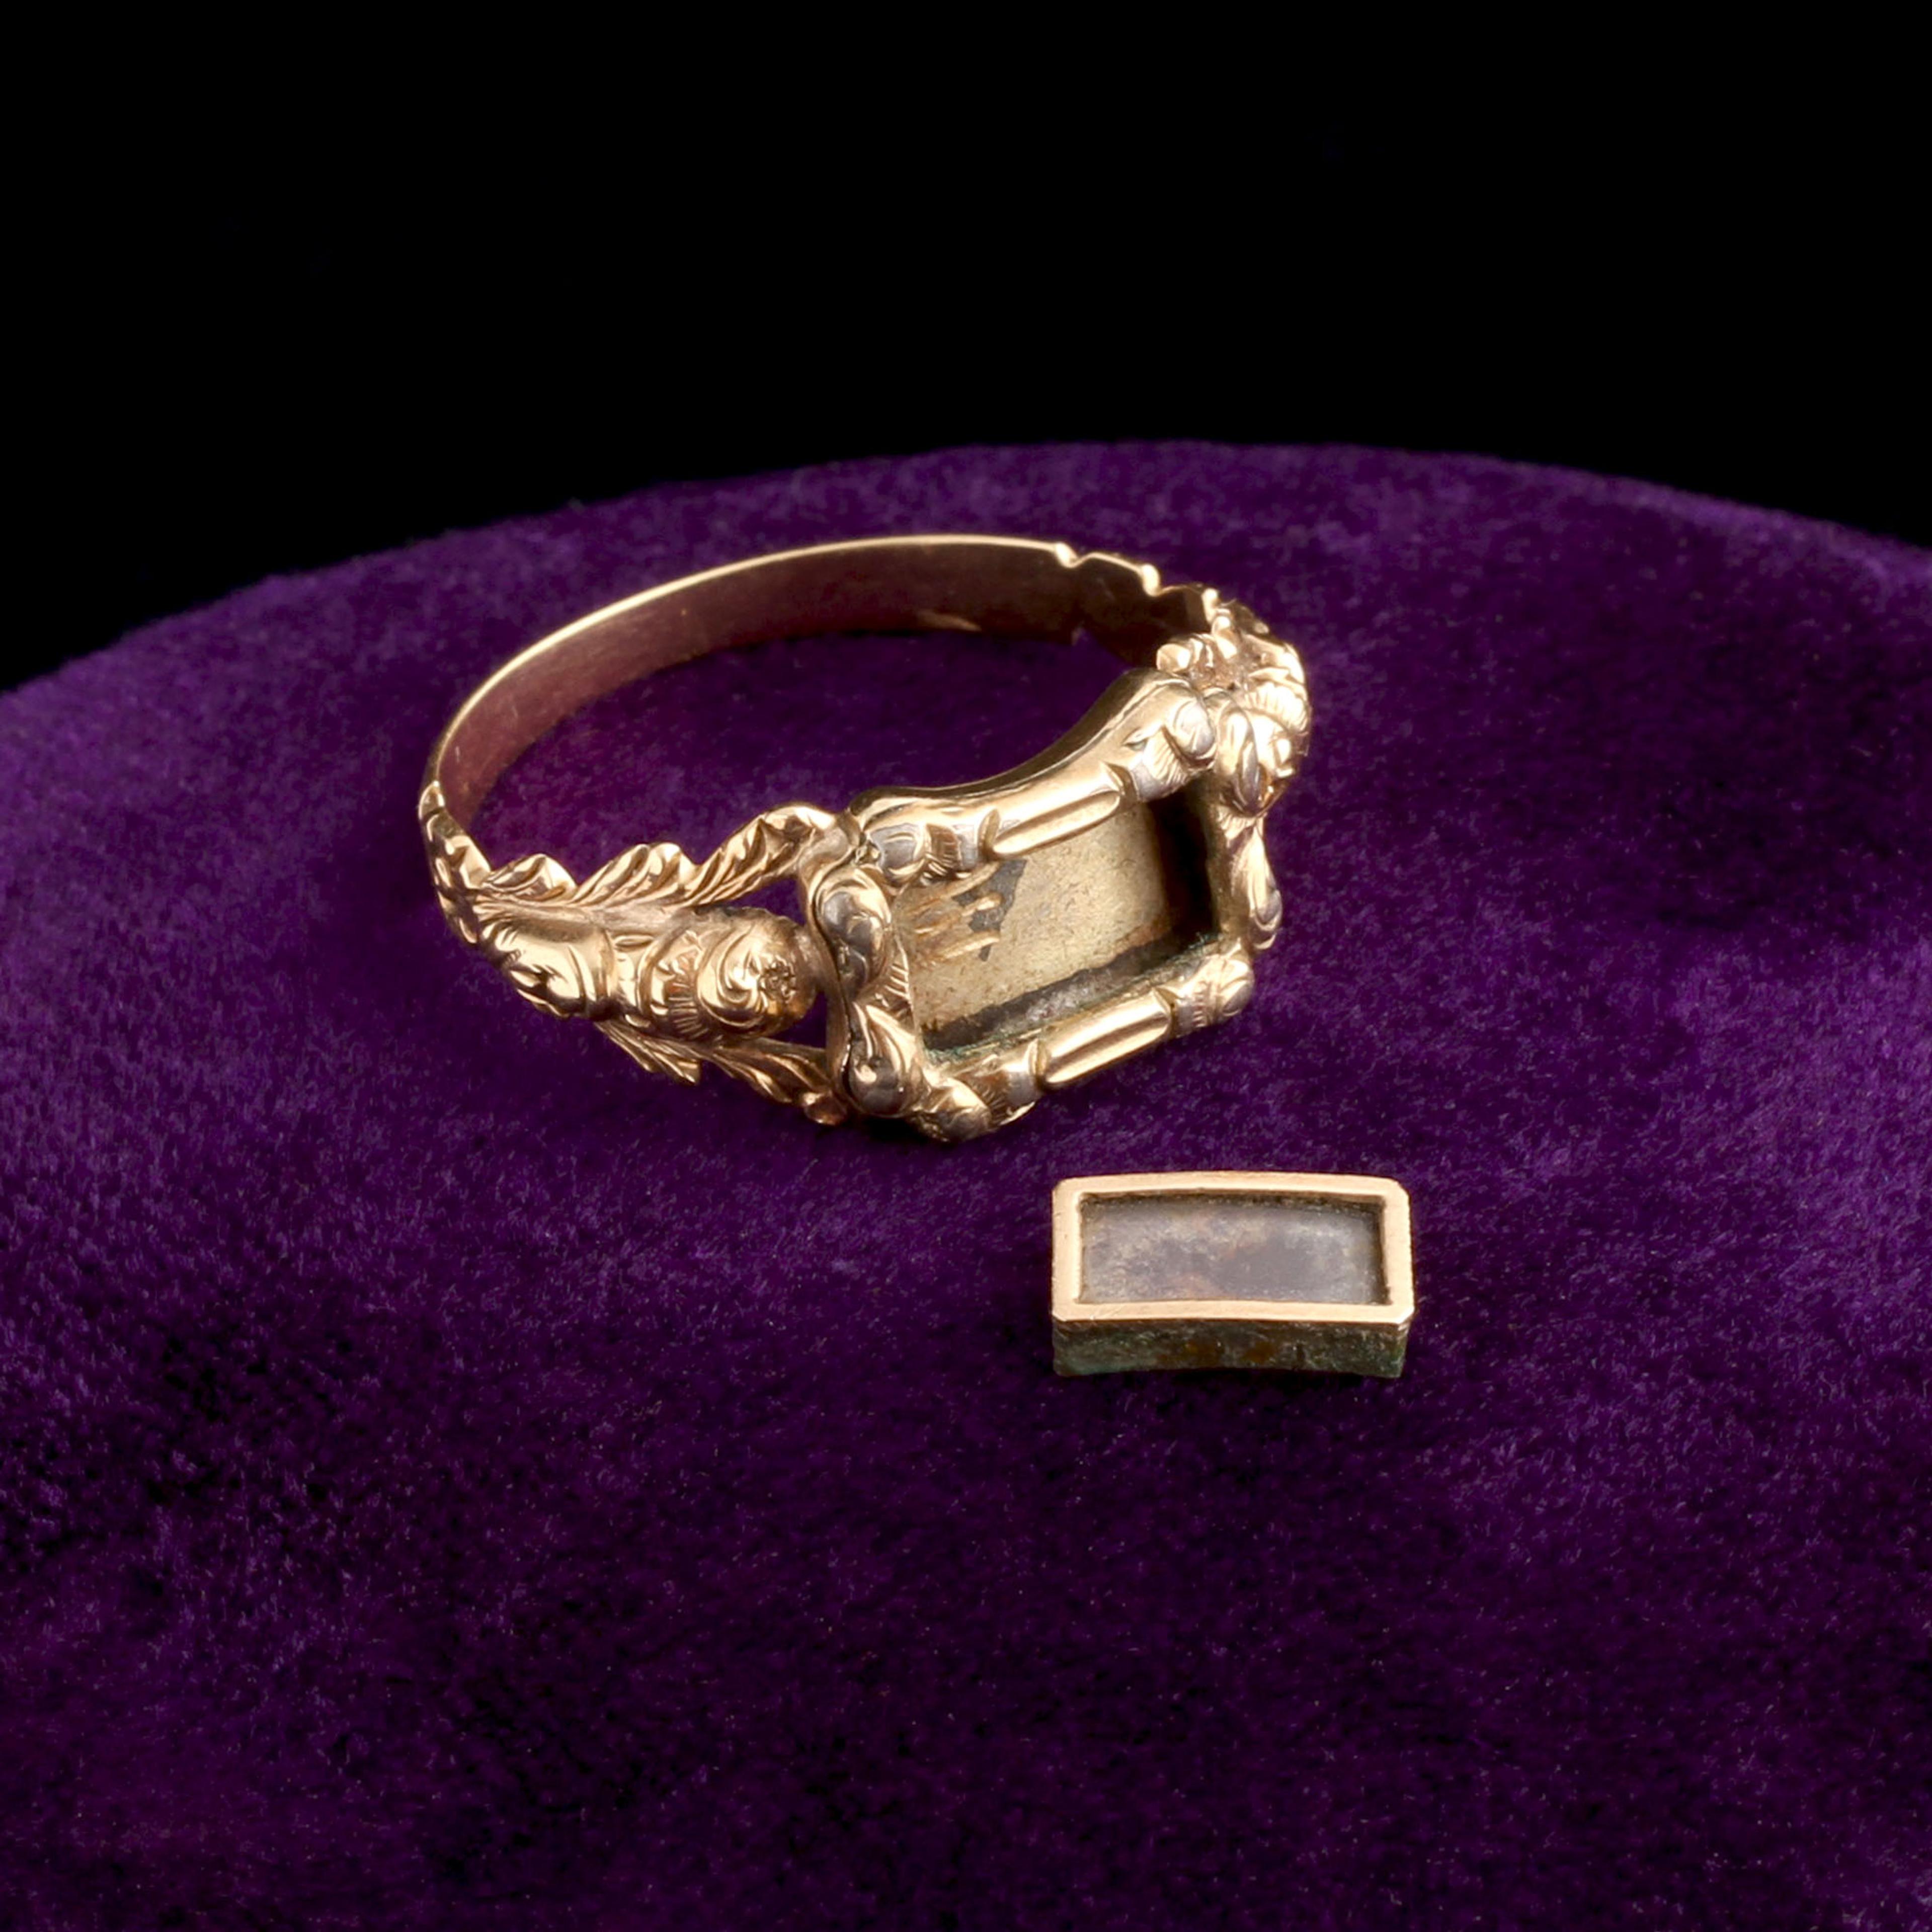 Detail of Georgian Locket Ring with locket removed